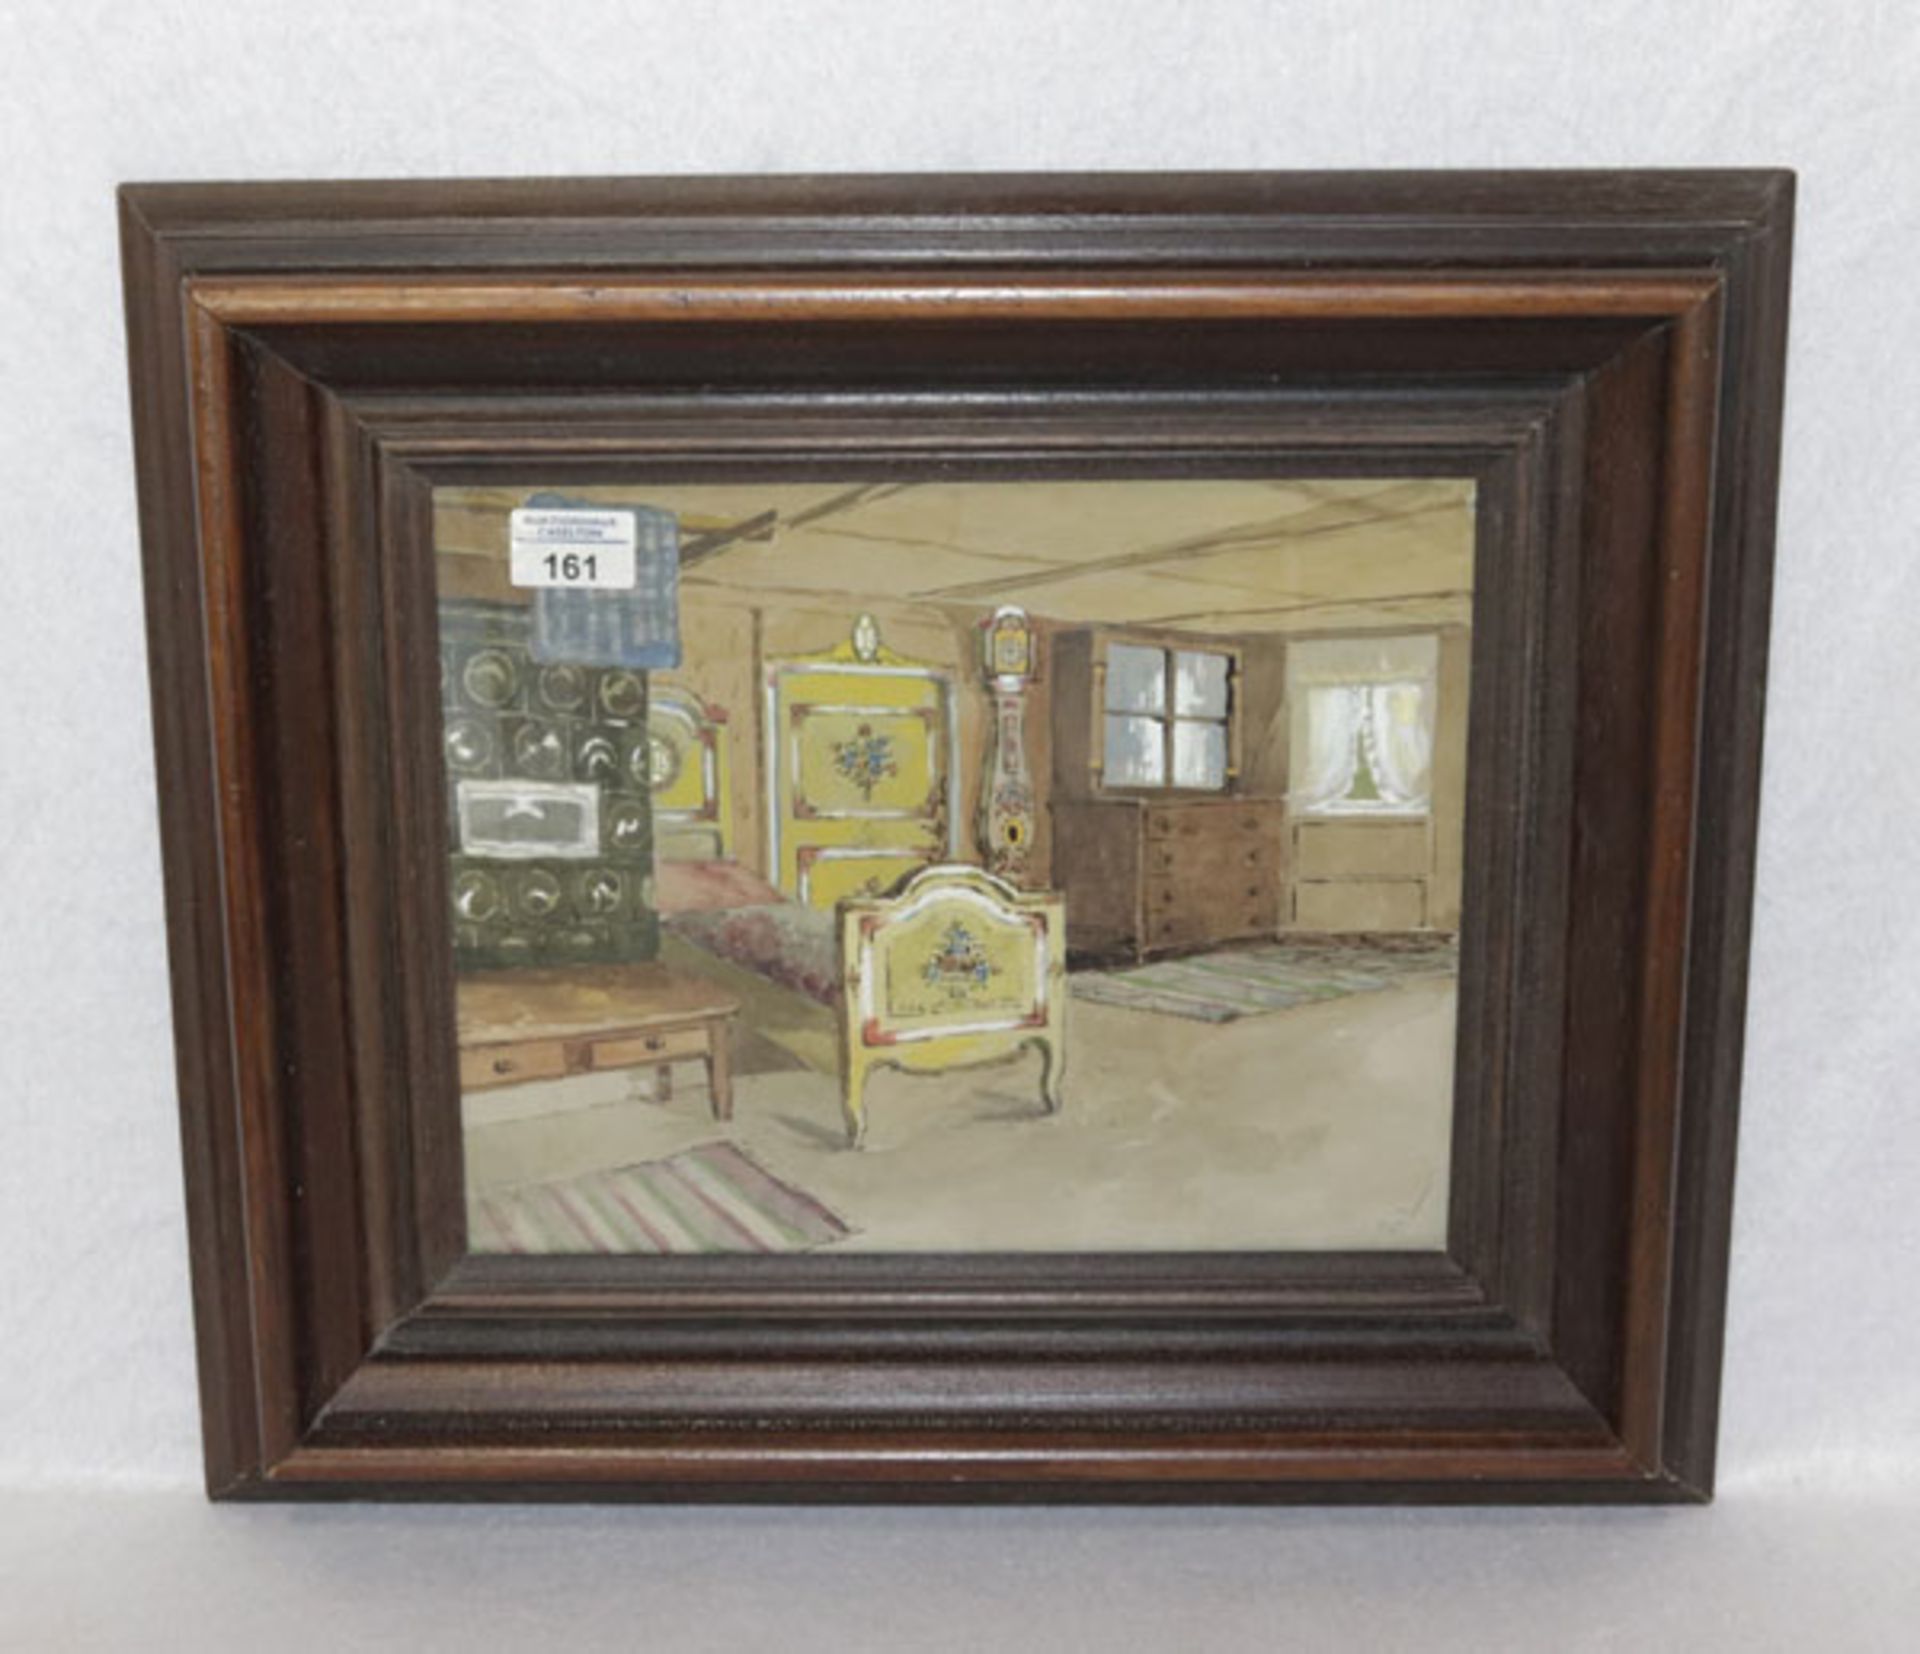 Gemälde Aquarell 'Bauernstube', signiert I. v. Zimmer ?, unter Glas gerahmt, incl. Rahmen 44 cm x 50